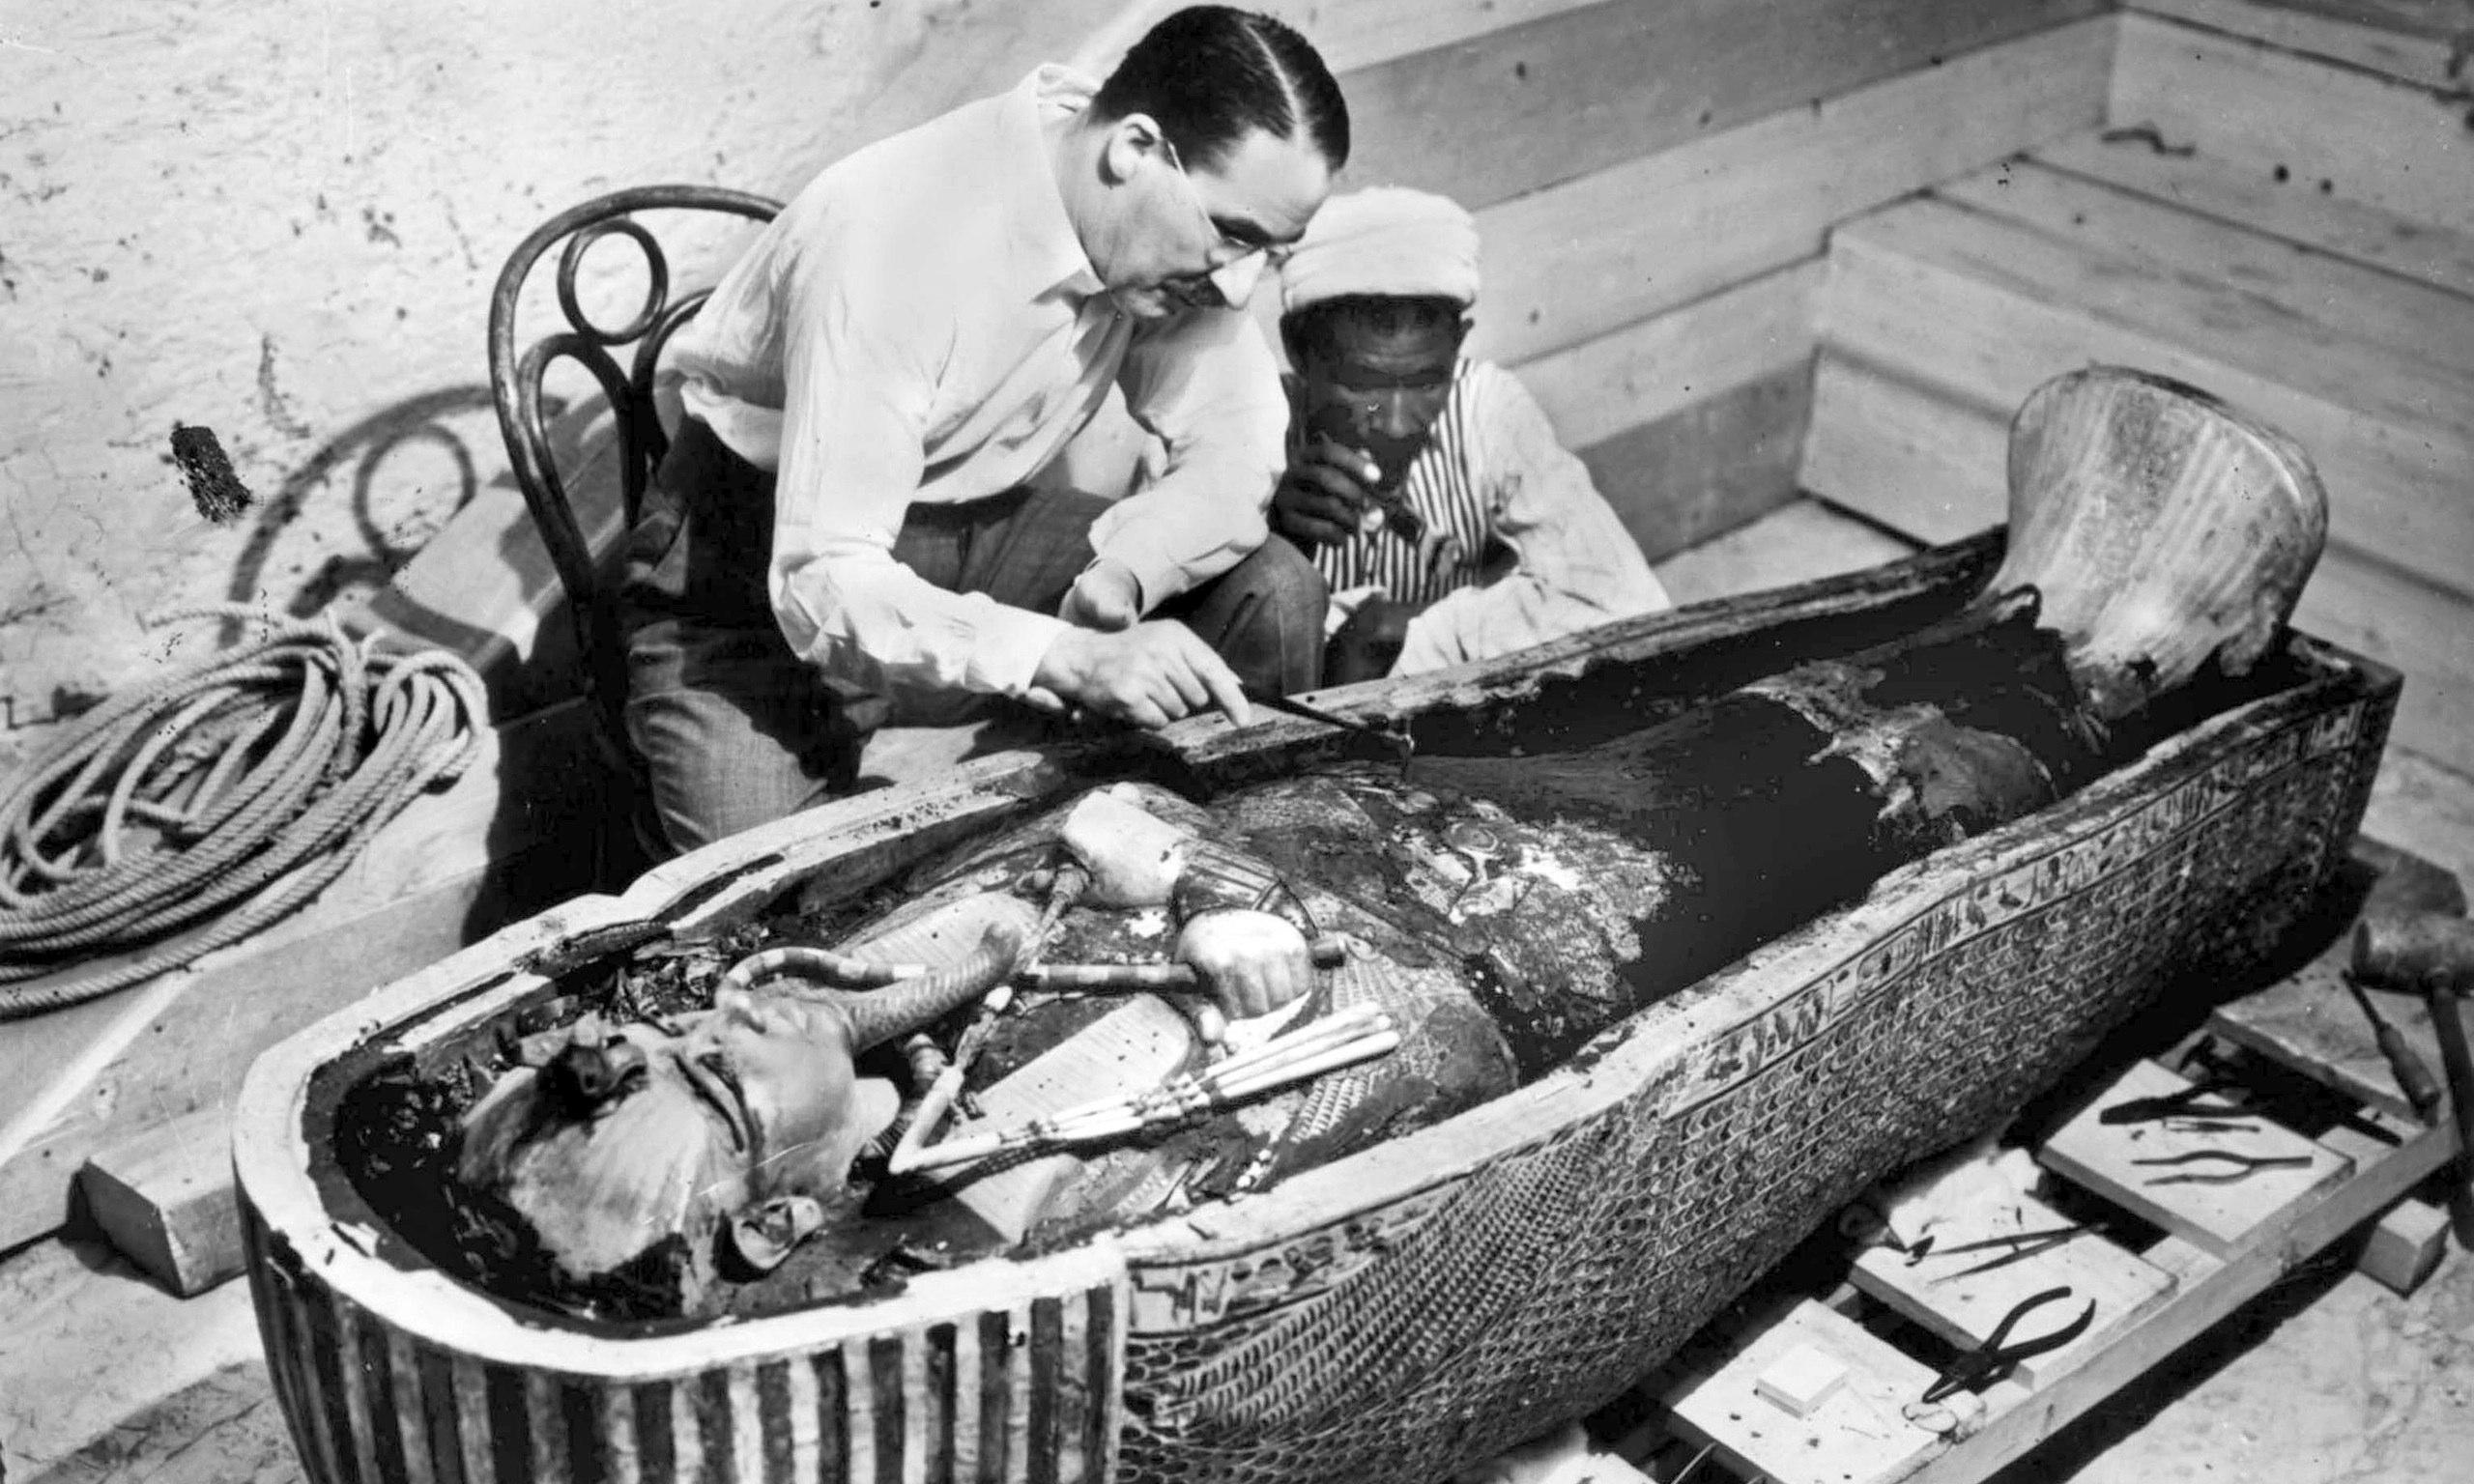 Howard Carter discovered the tomb of Tutankhamun